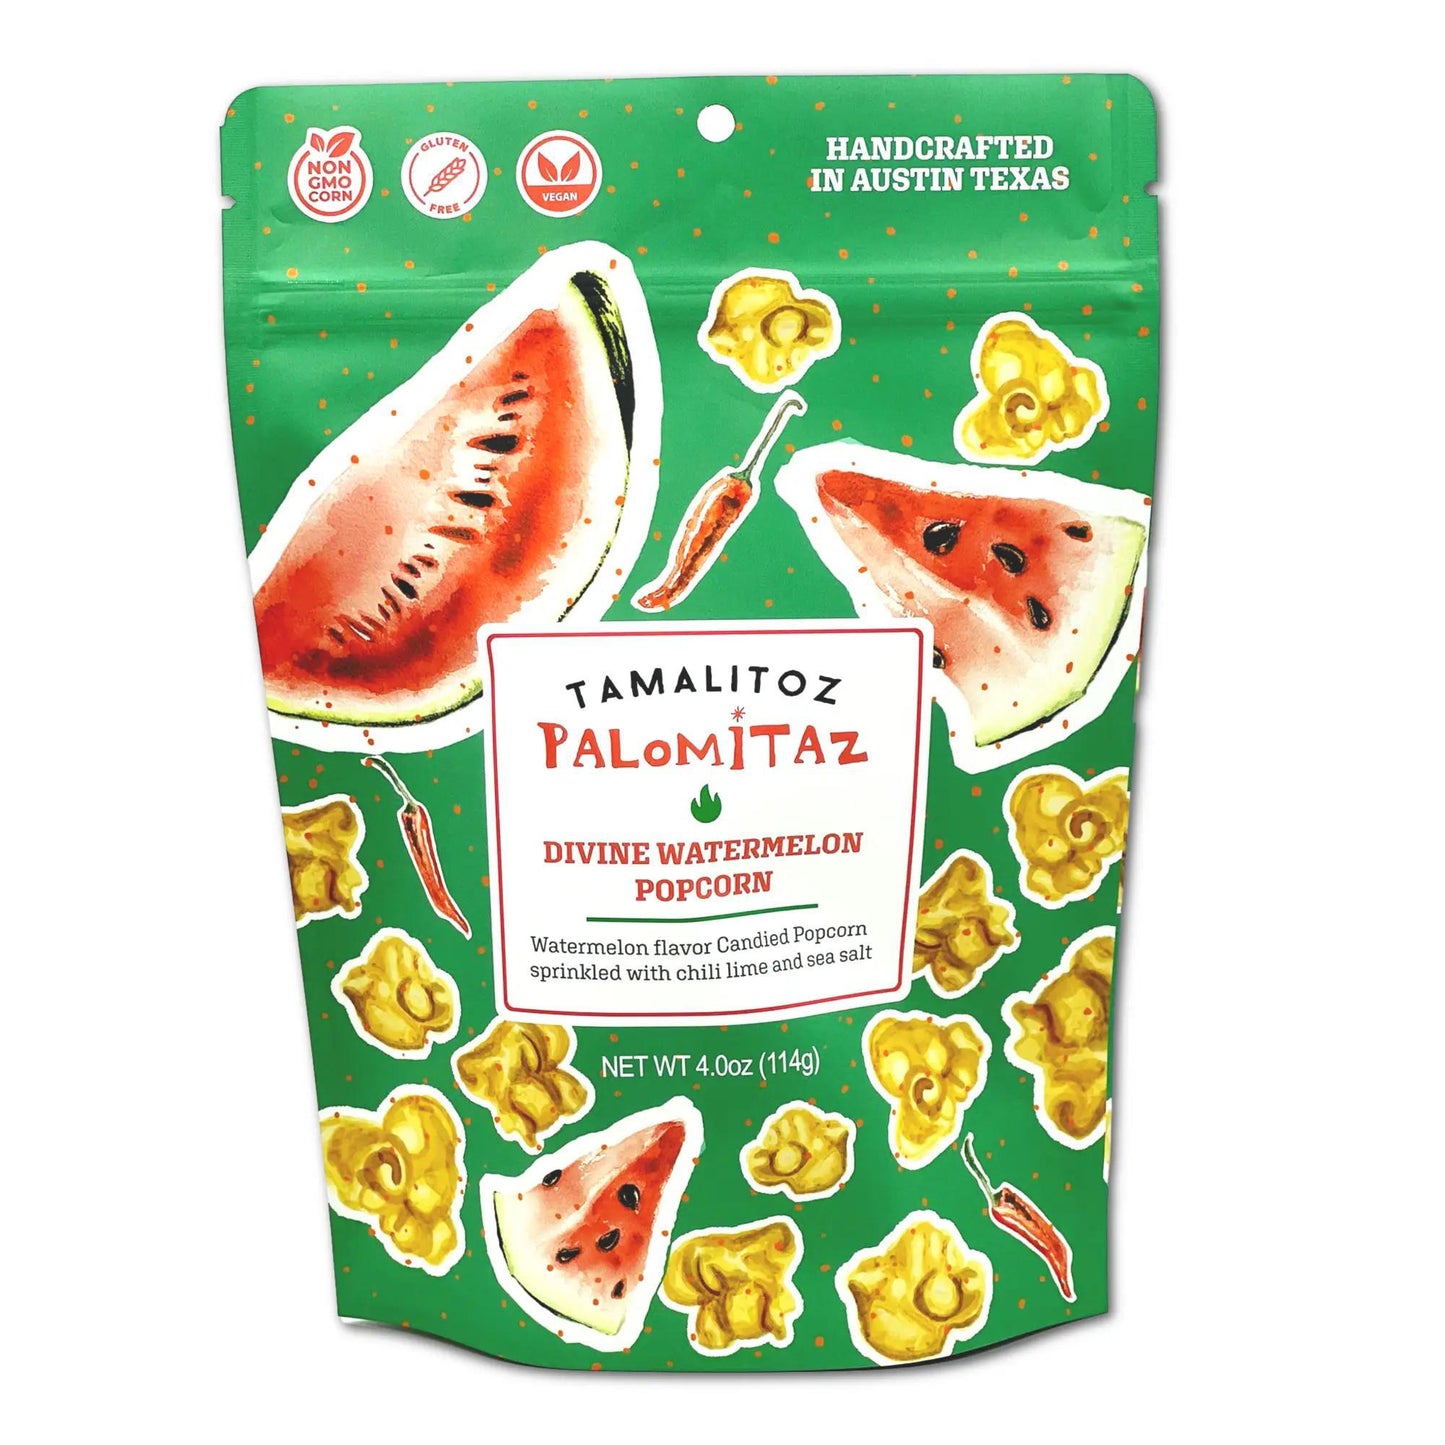 Palomitaz - Divine Watermelon Popcorn